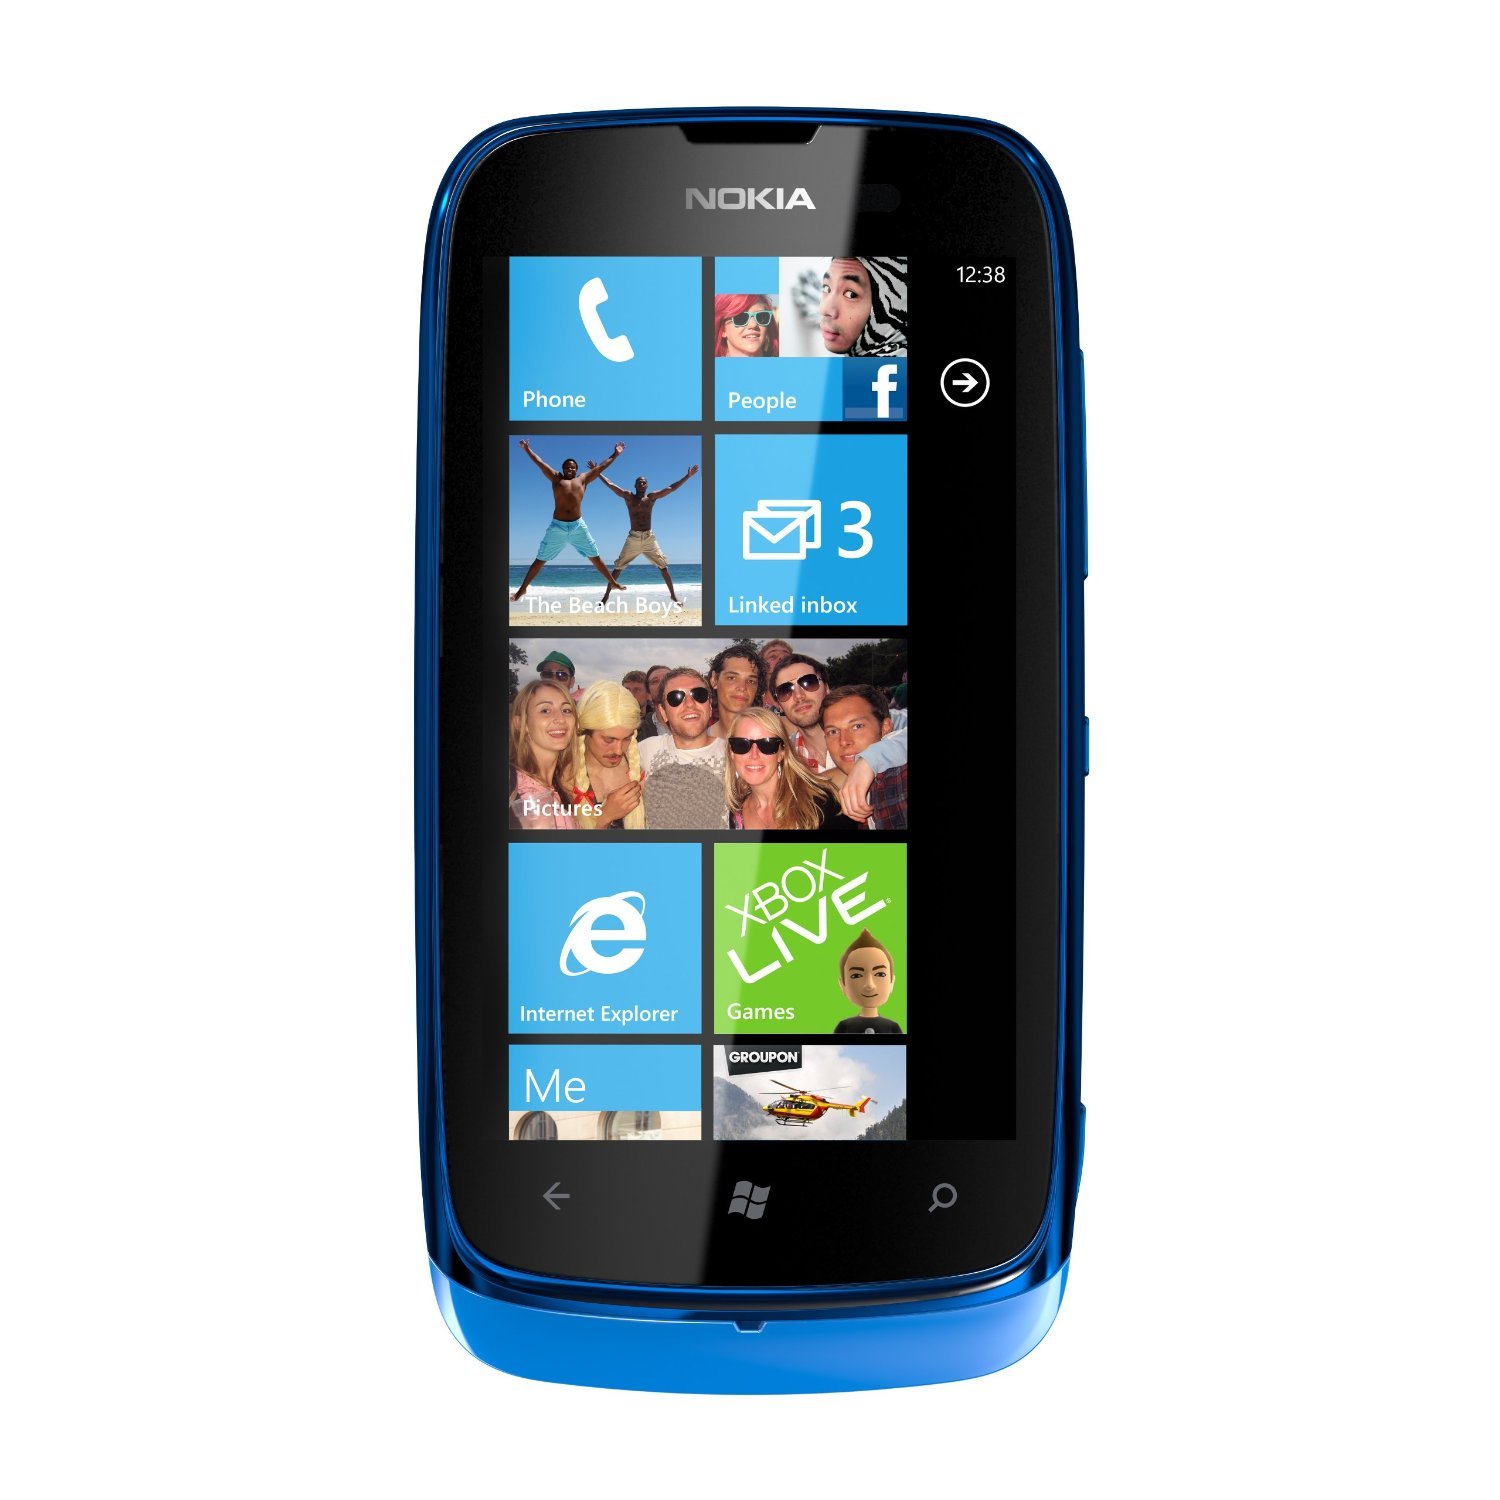 Nokia Lumia 610 review - The Verge